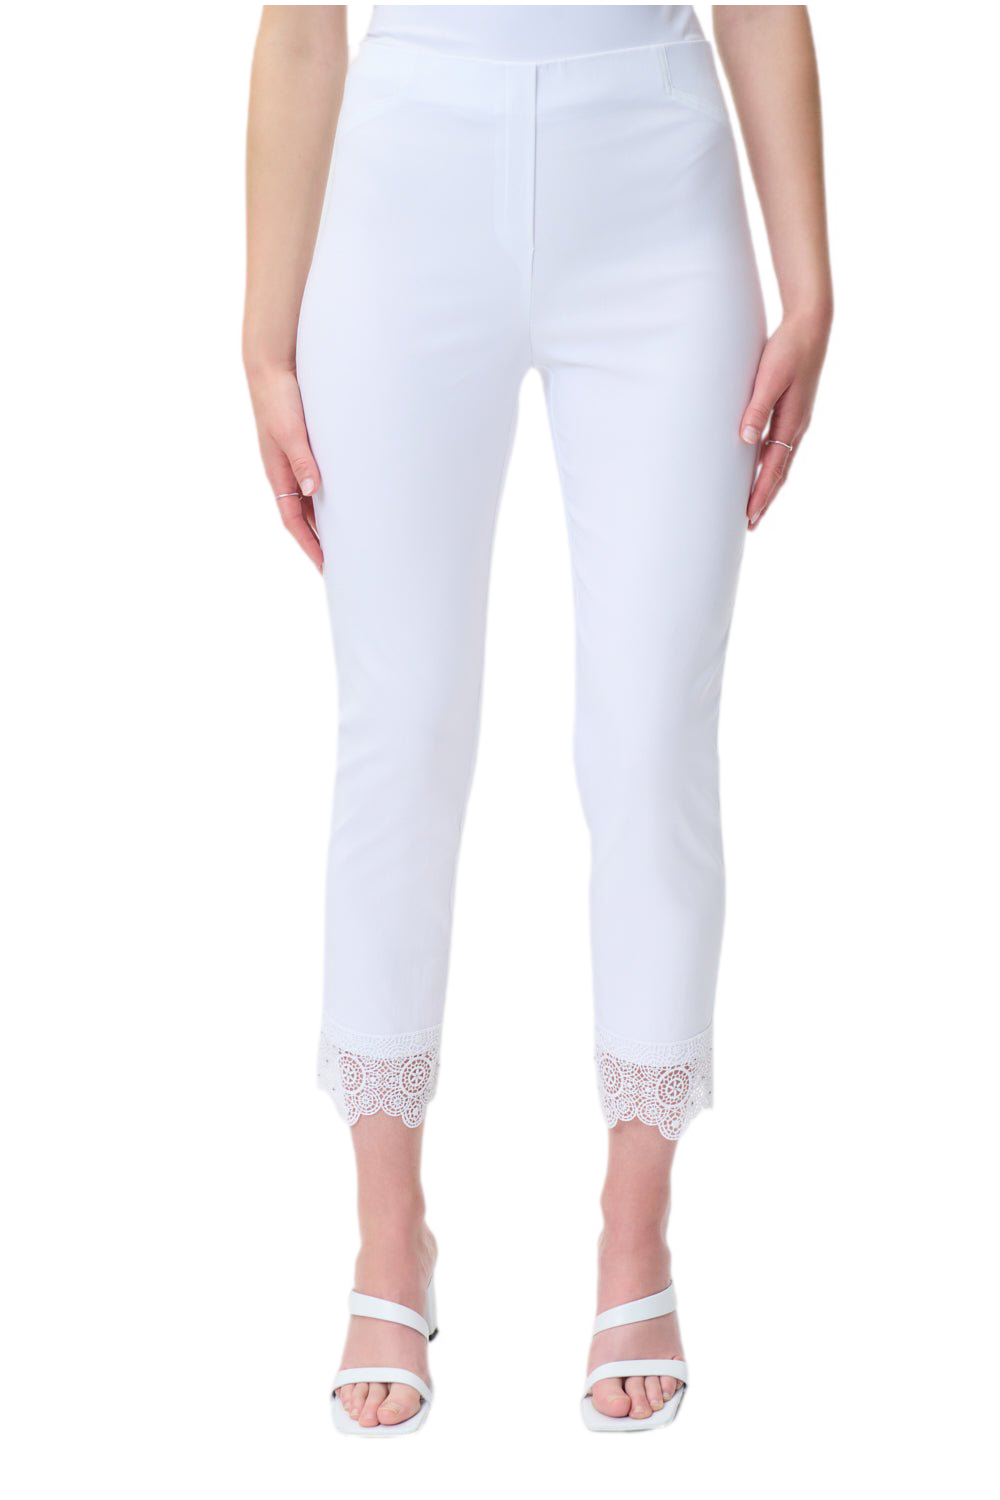 Joseph Ribkoff Lace Hem Pants Style 231021 